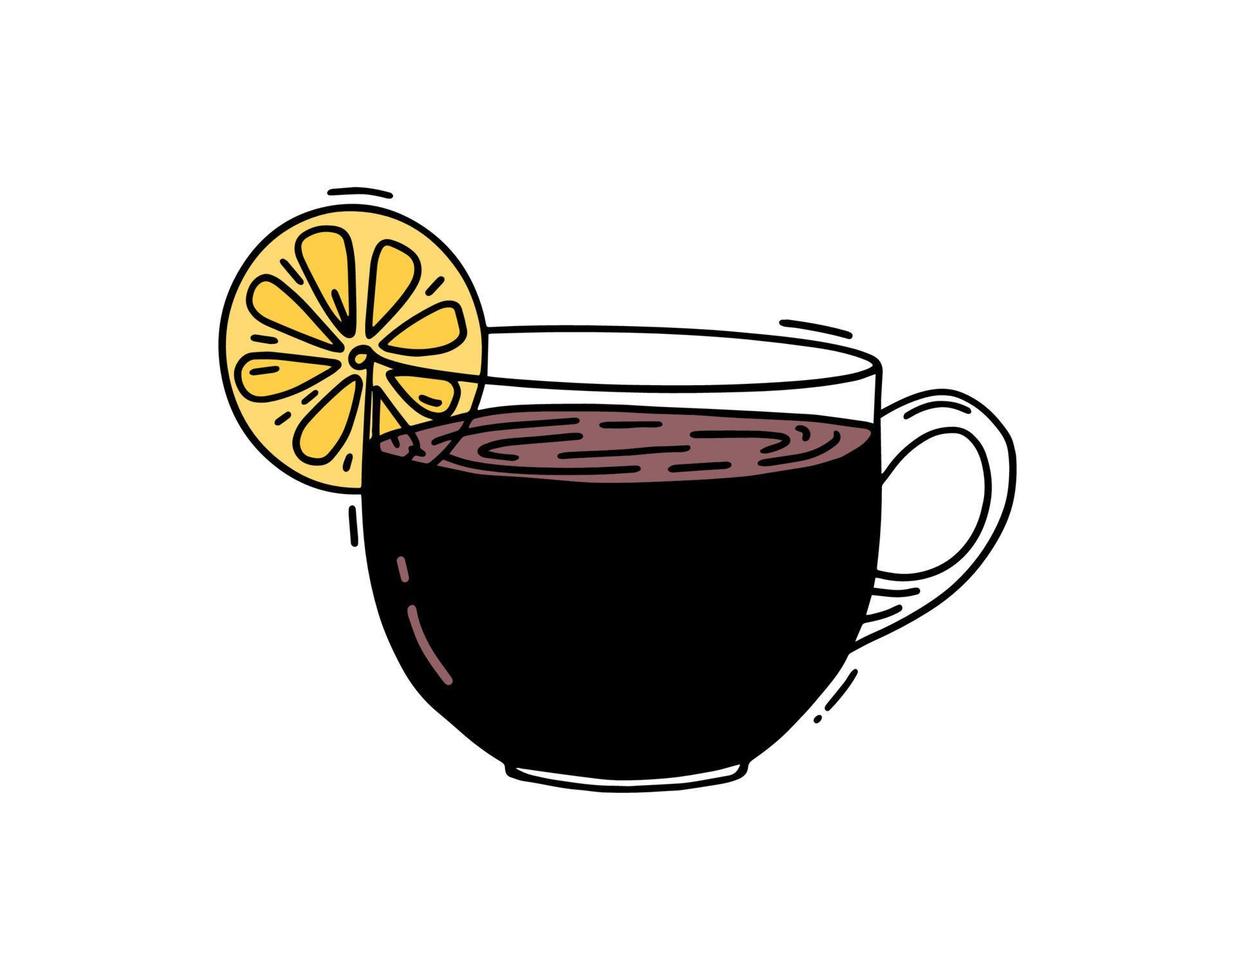 tea lemon cup doodle vector illustration. Sketchy Tea Time